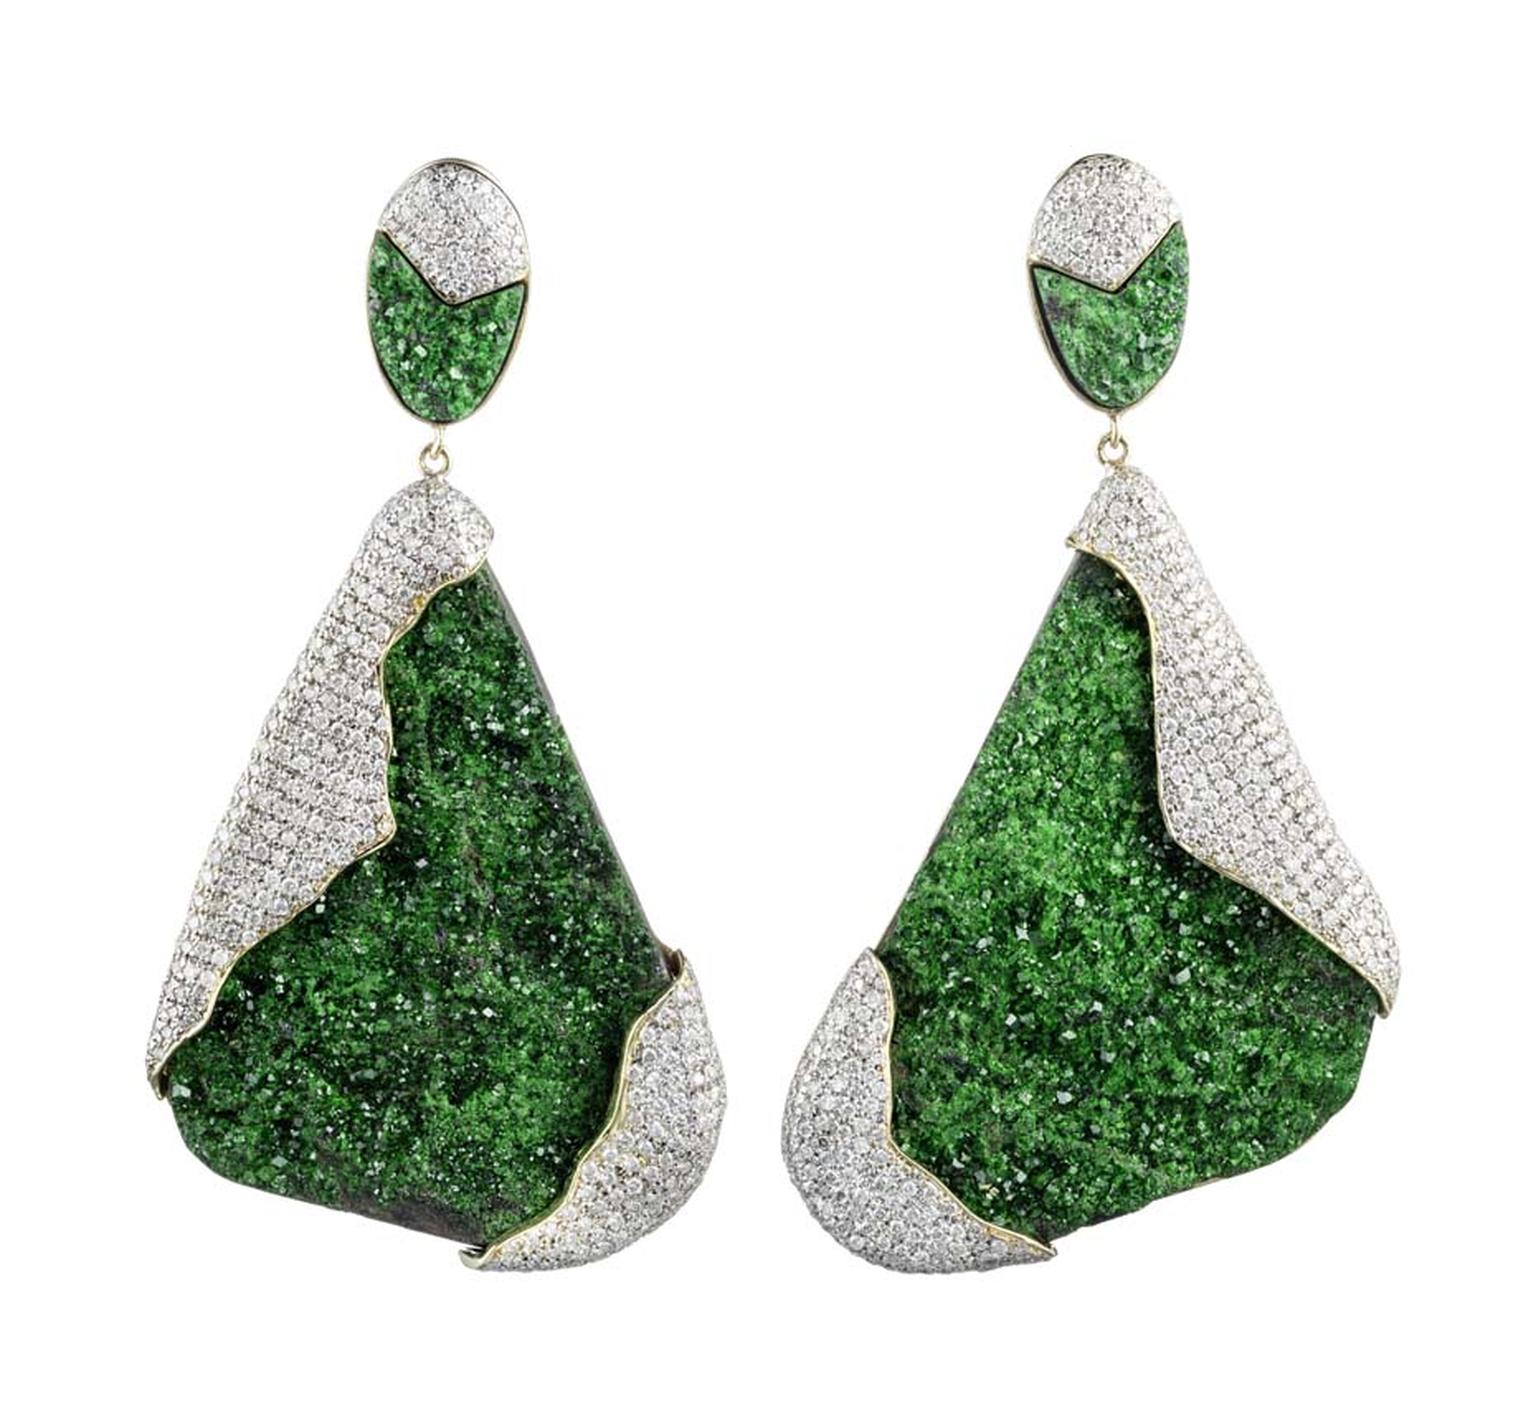 Kara Ross Petra earrings featuring uvarorite garnet and diamonds set in gold